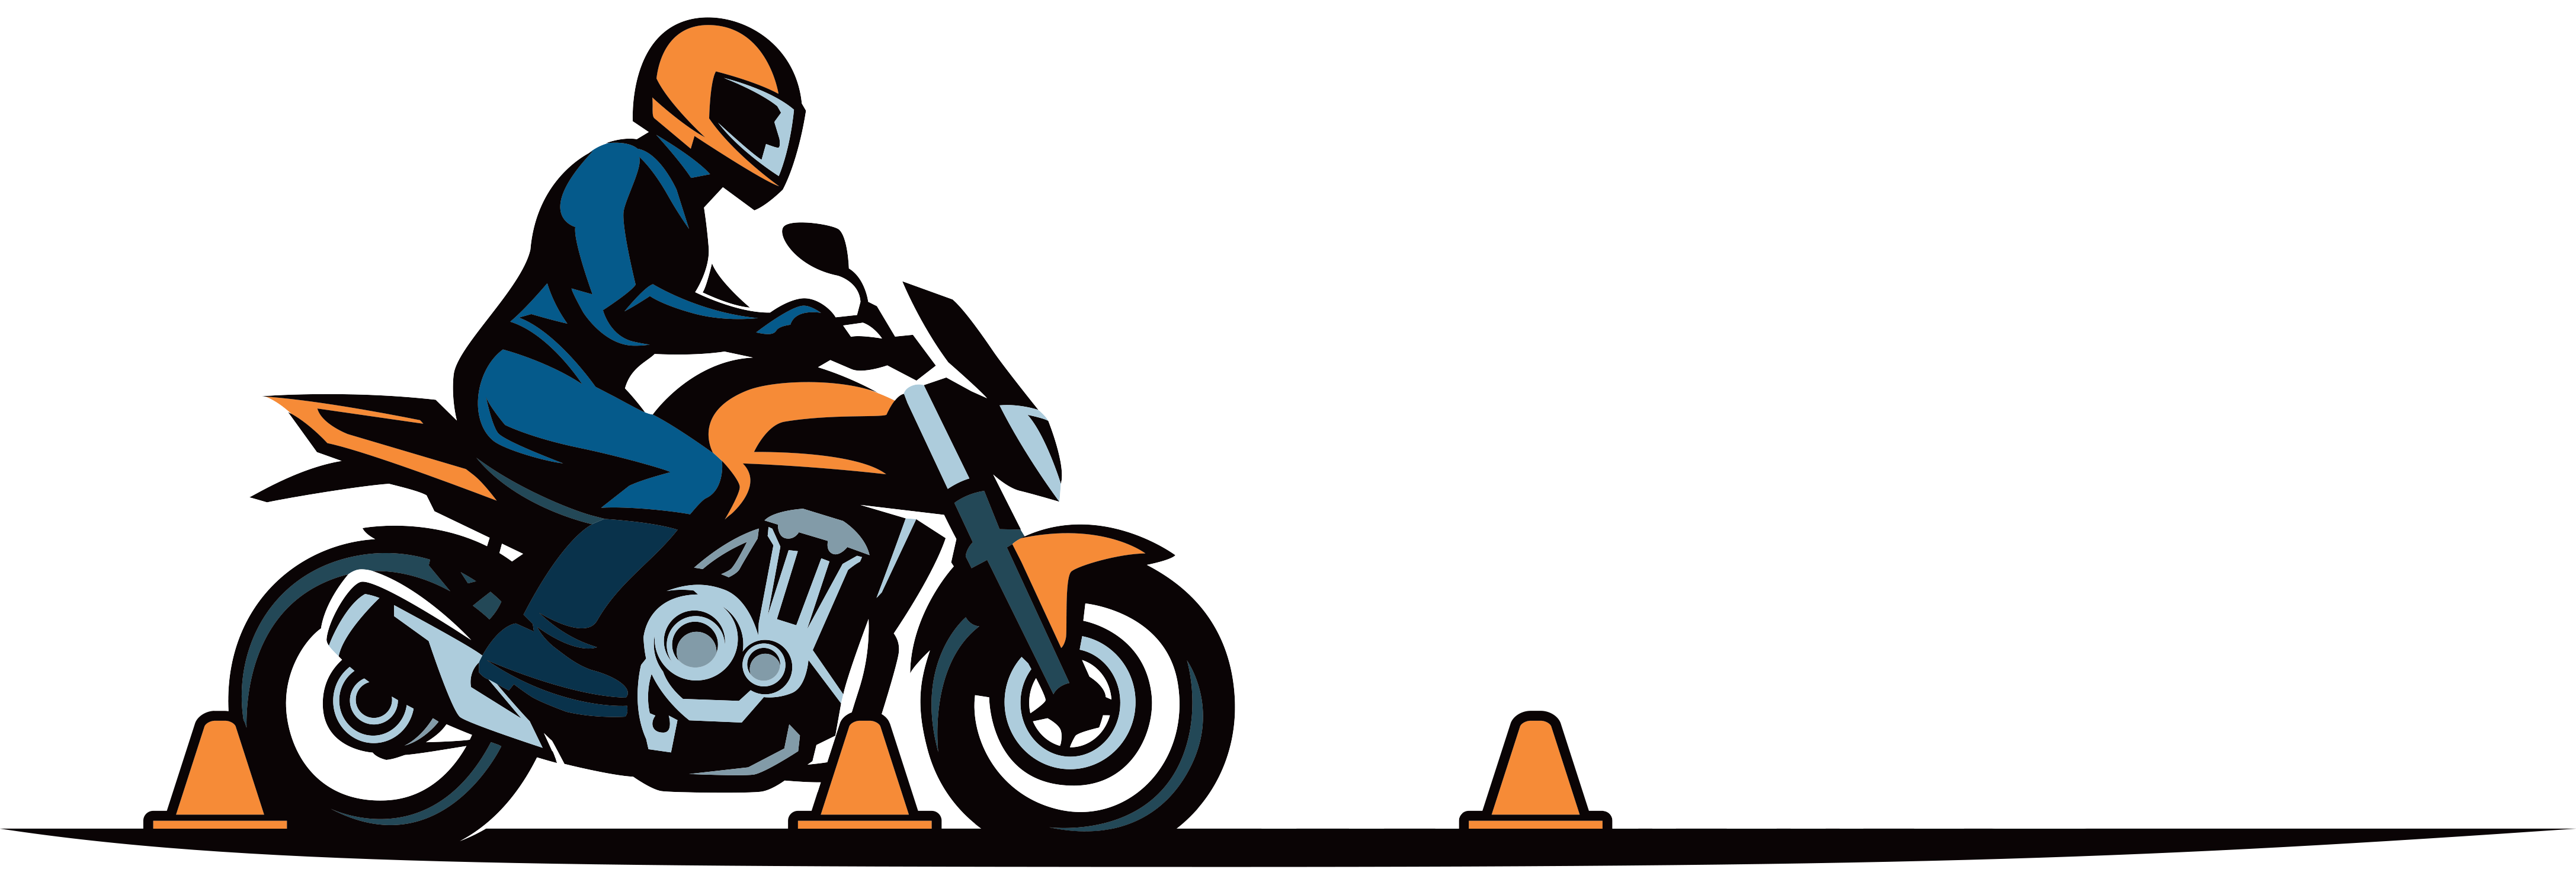 USA Motorcycle Training